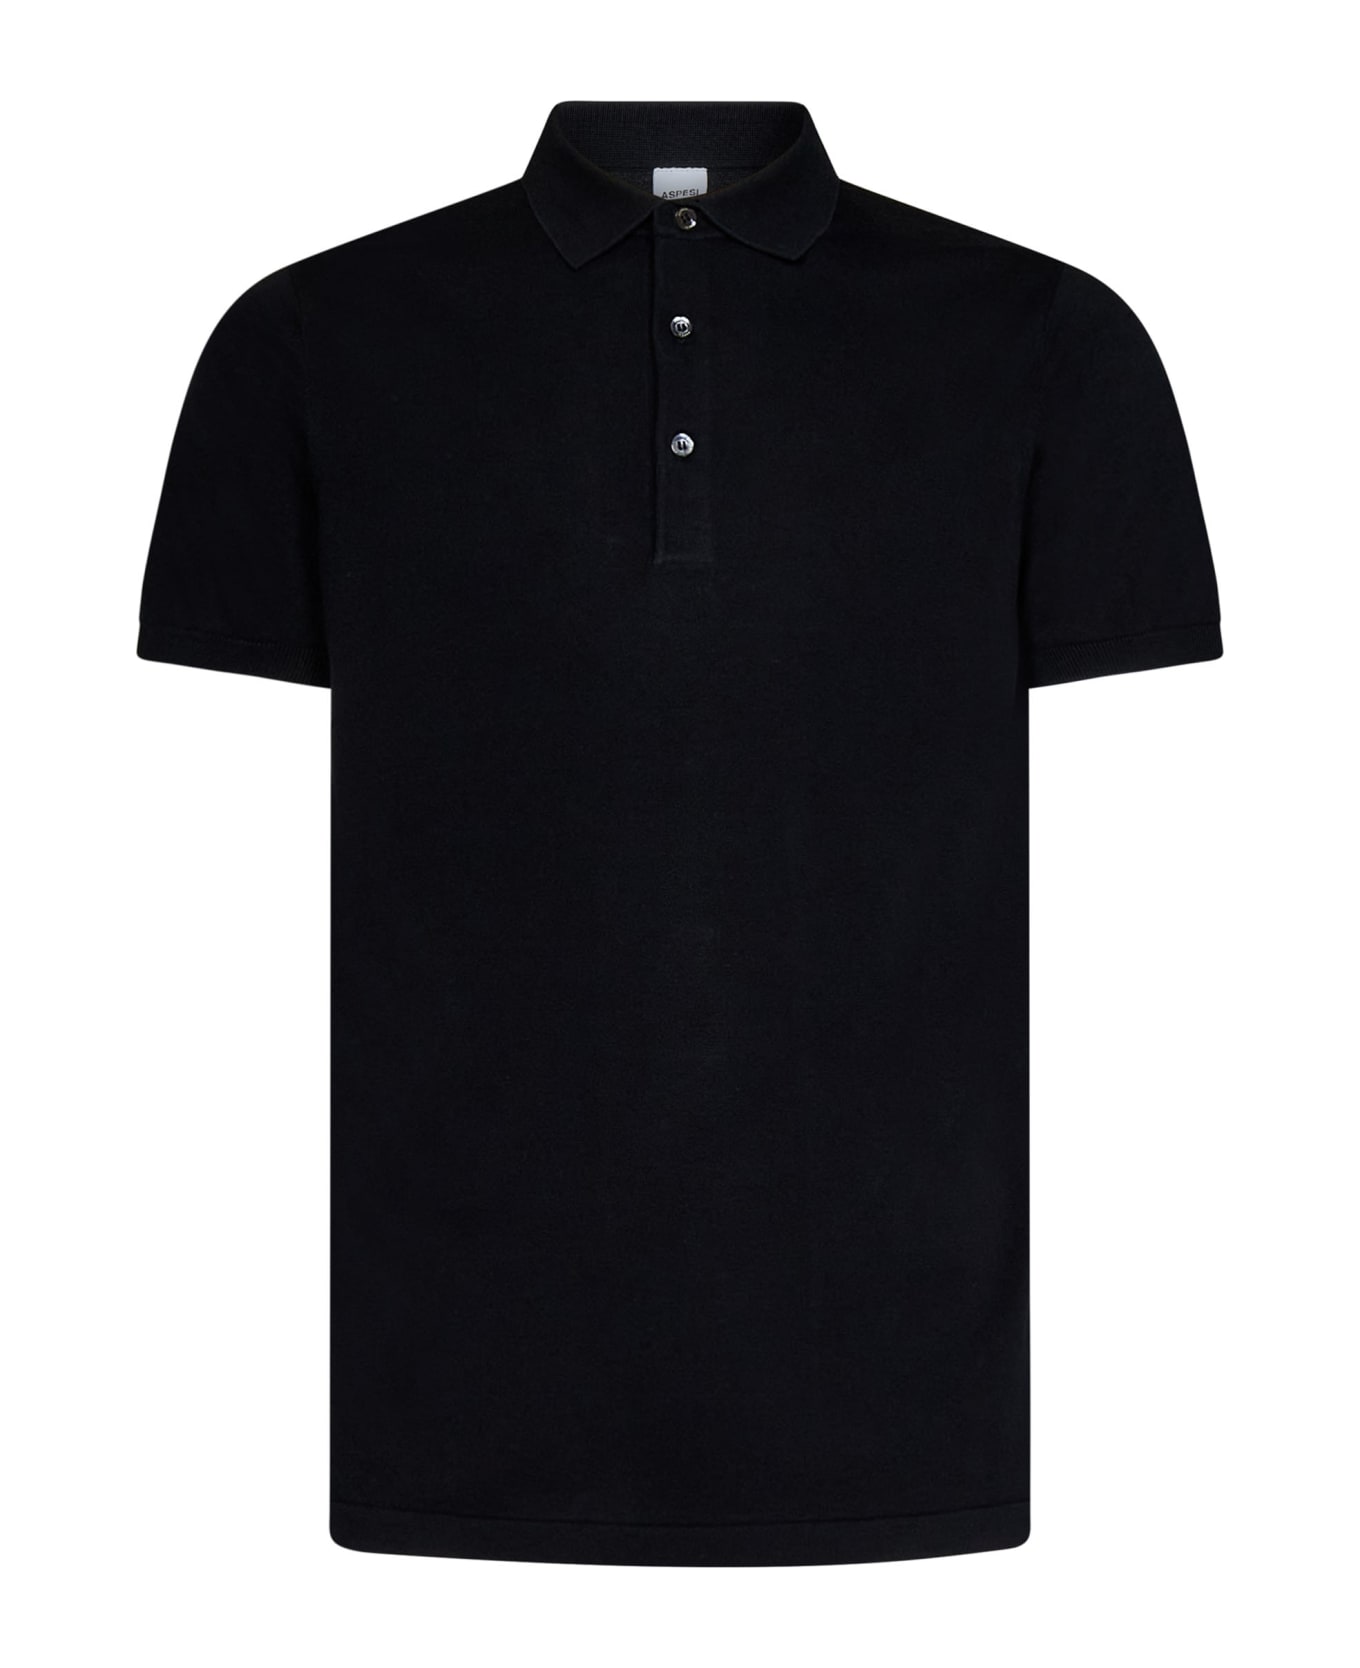 Aspesi Polo Shirt - Black